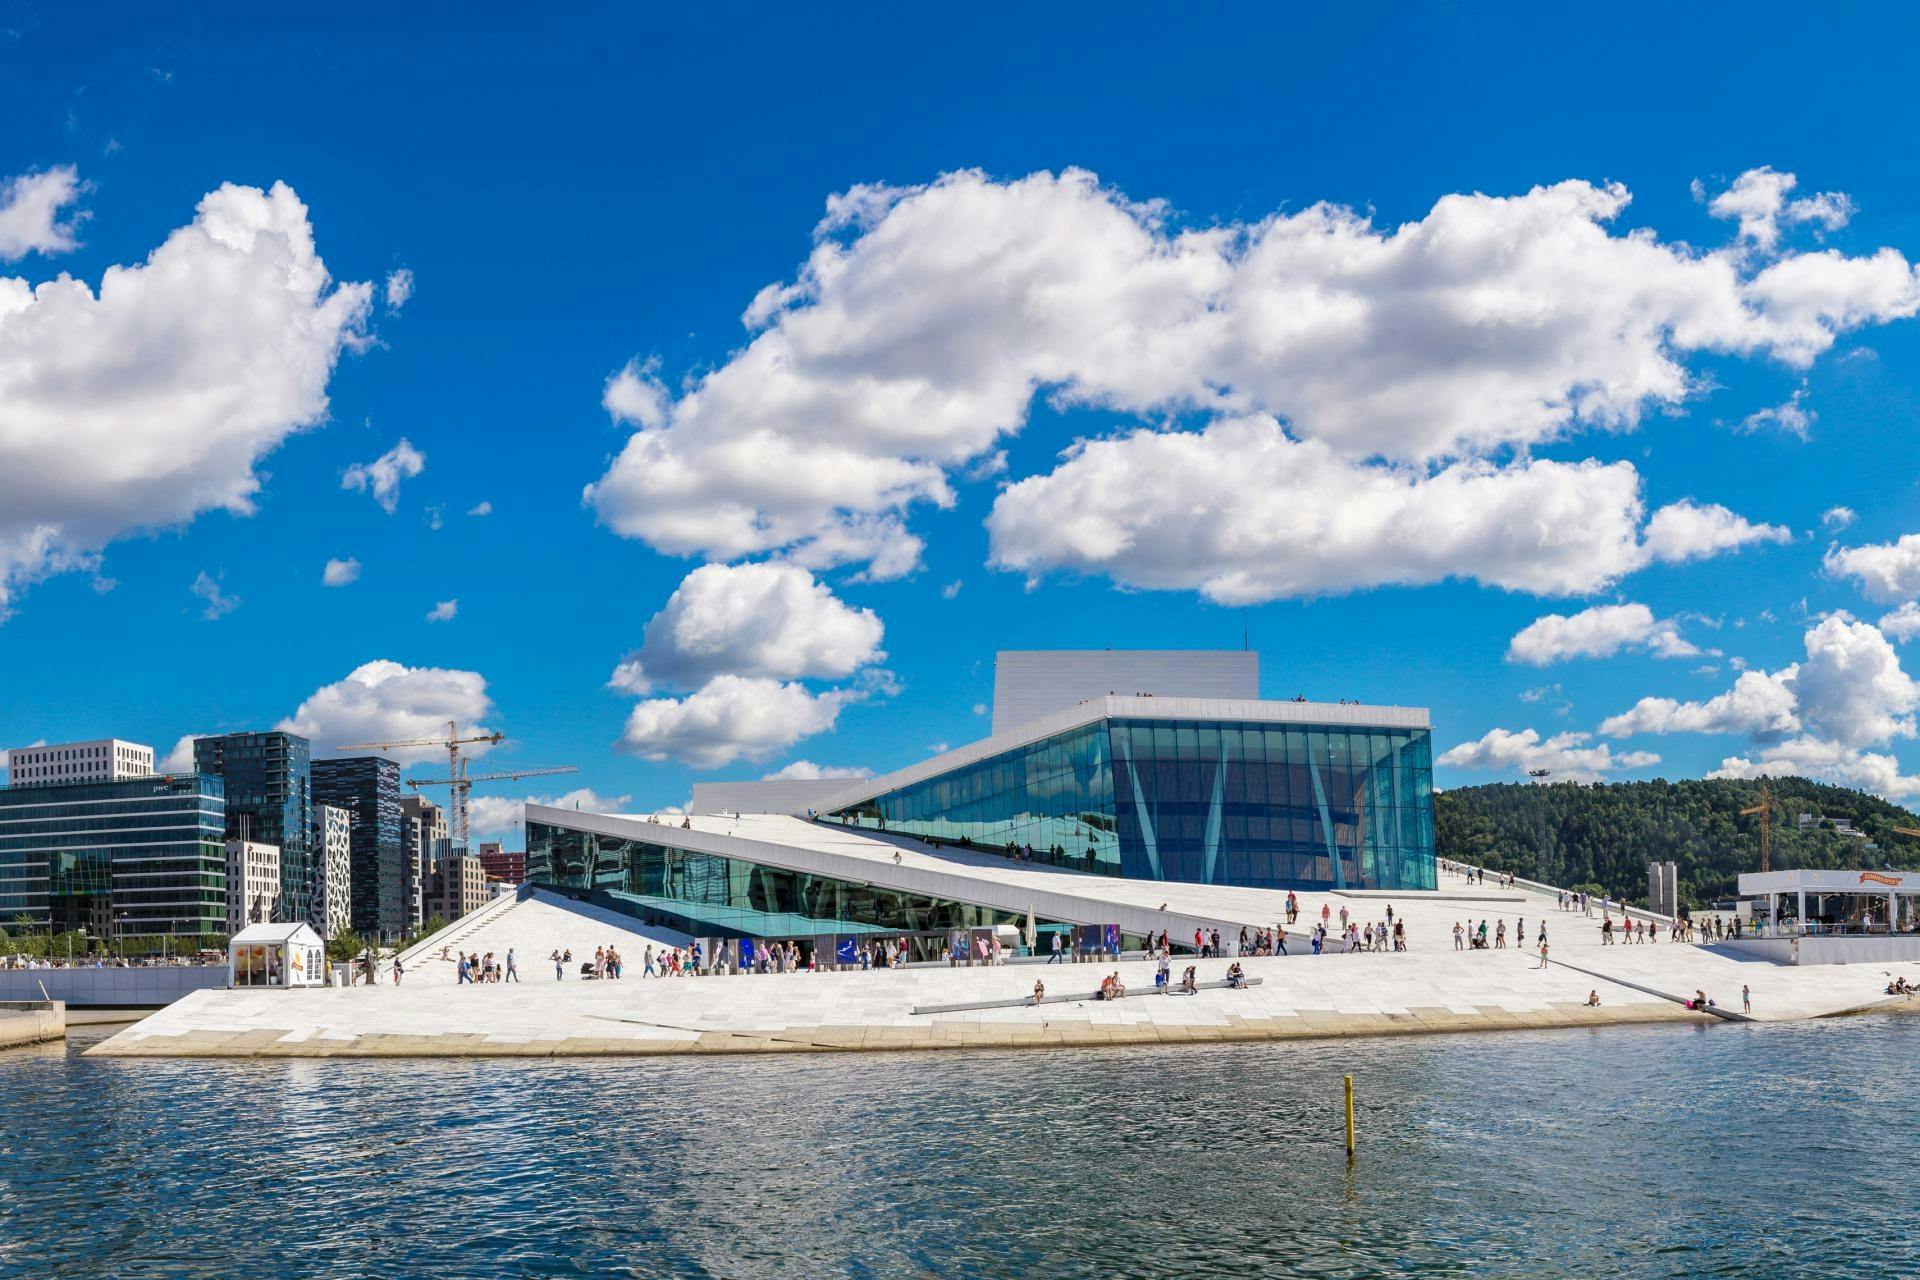 The National Opera House of Oslo